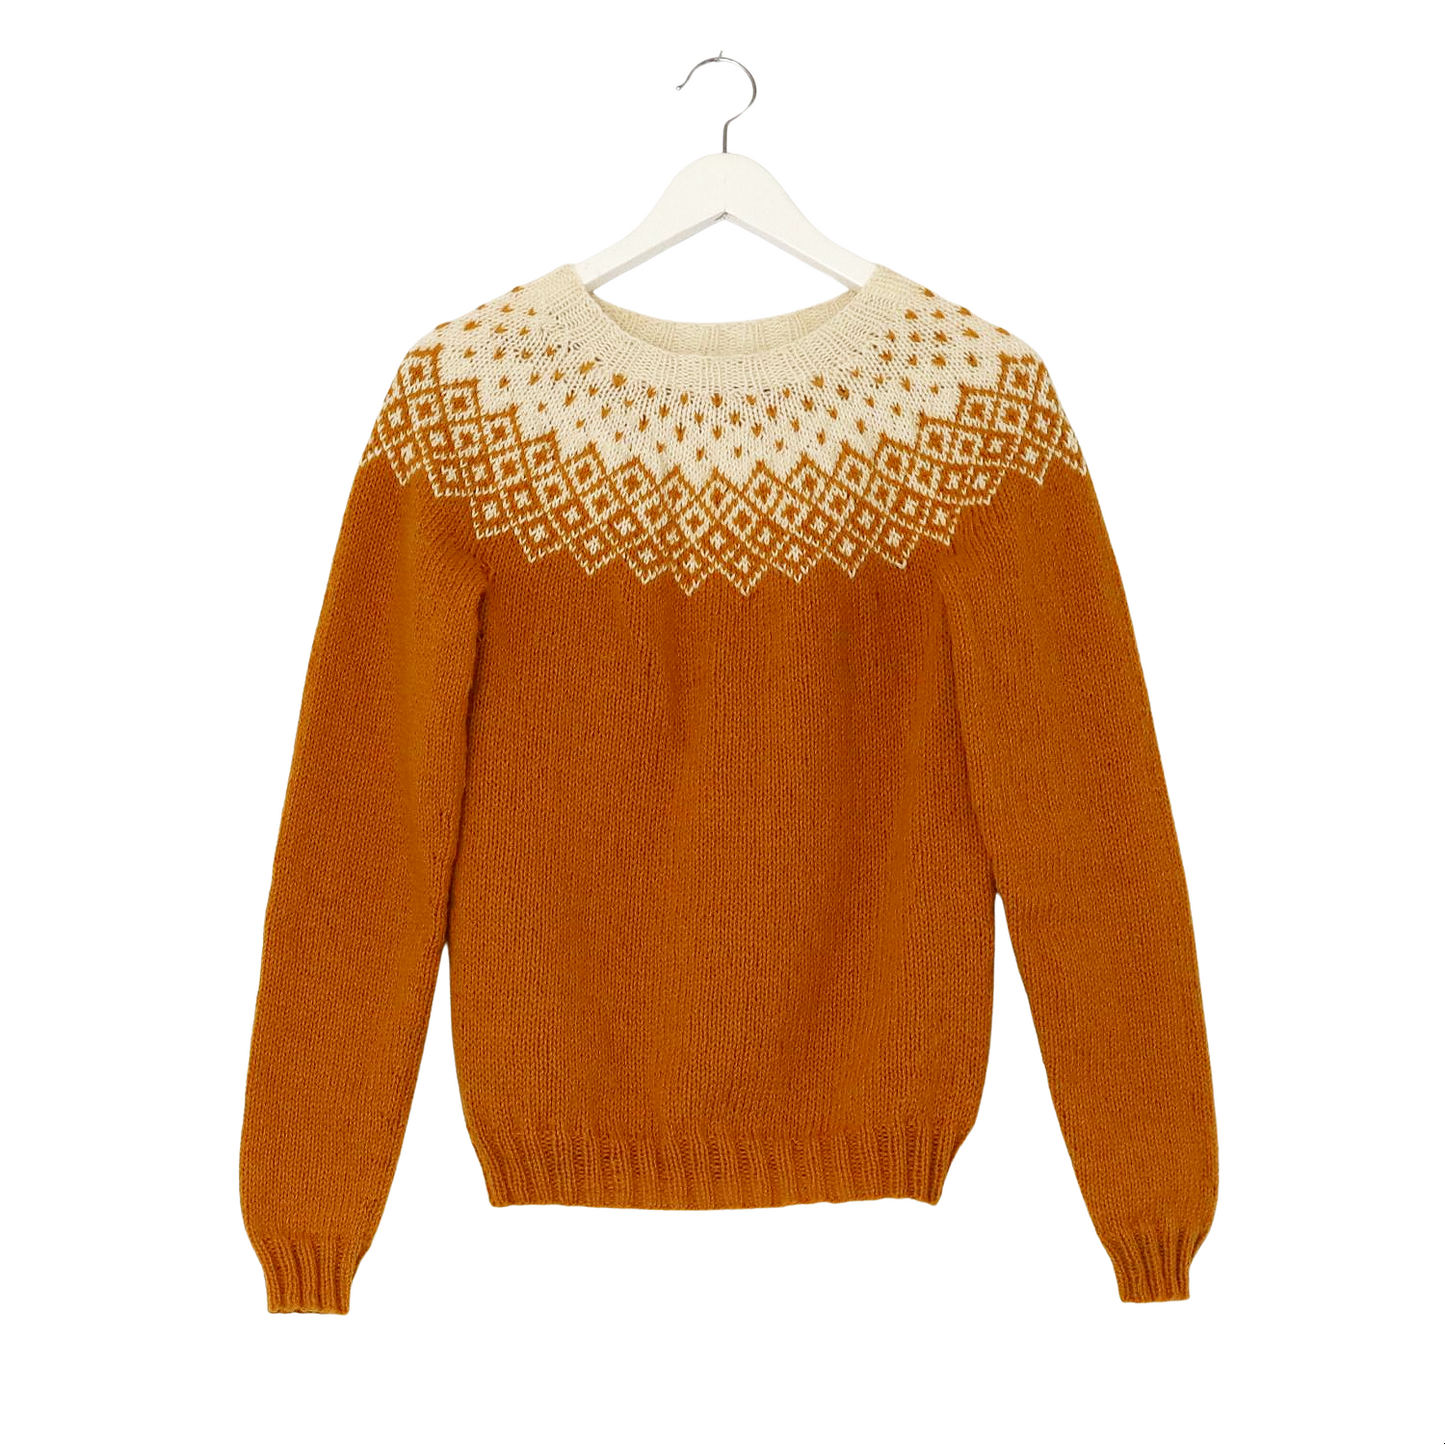 Bohéme sweater PDF knitting pattern for women